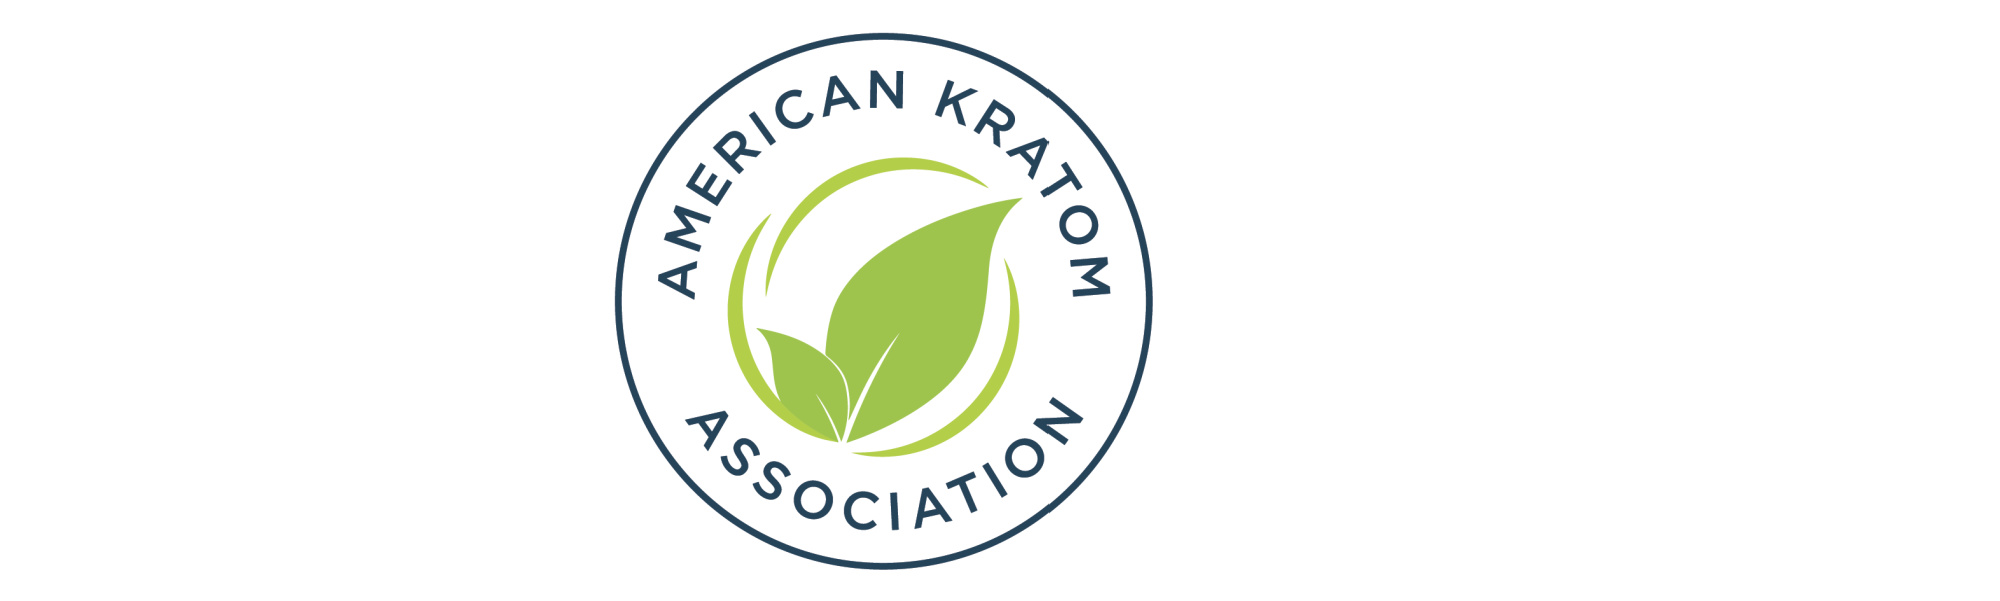 image of the american kratom association